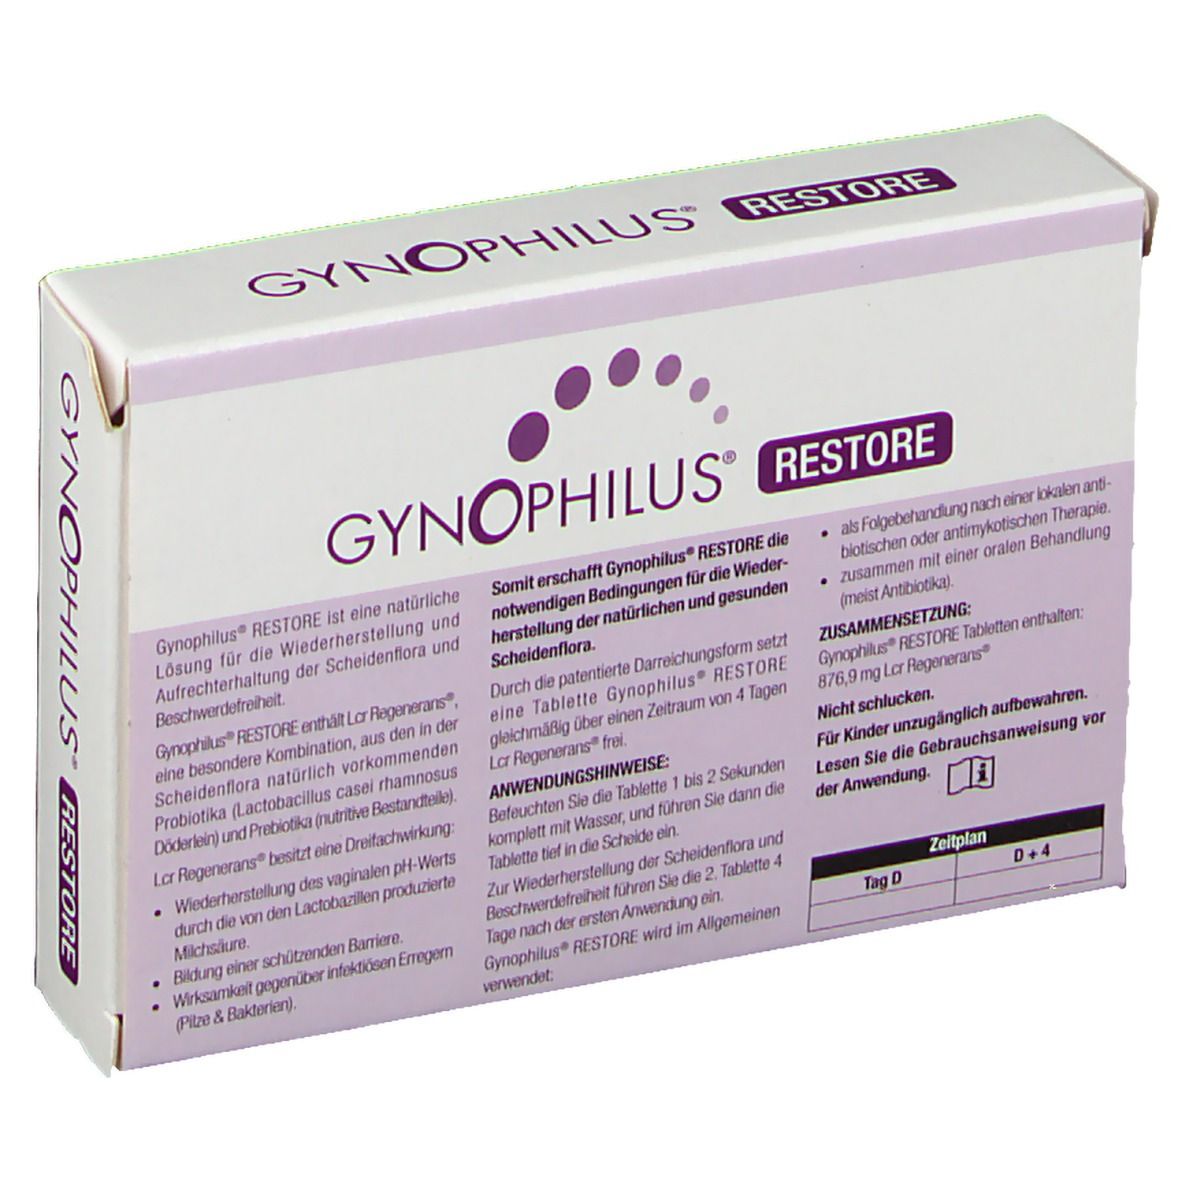 Gynophilus RESTORE